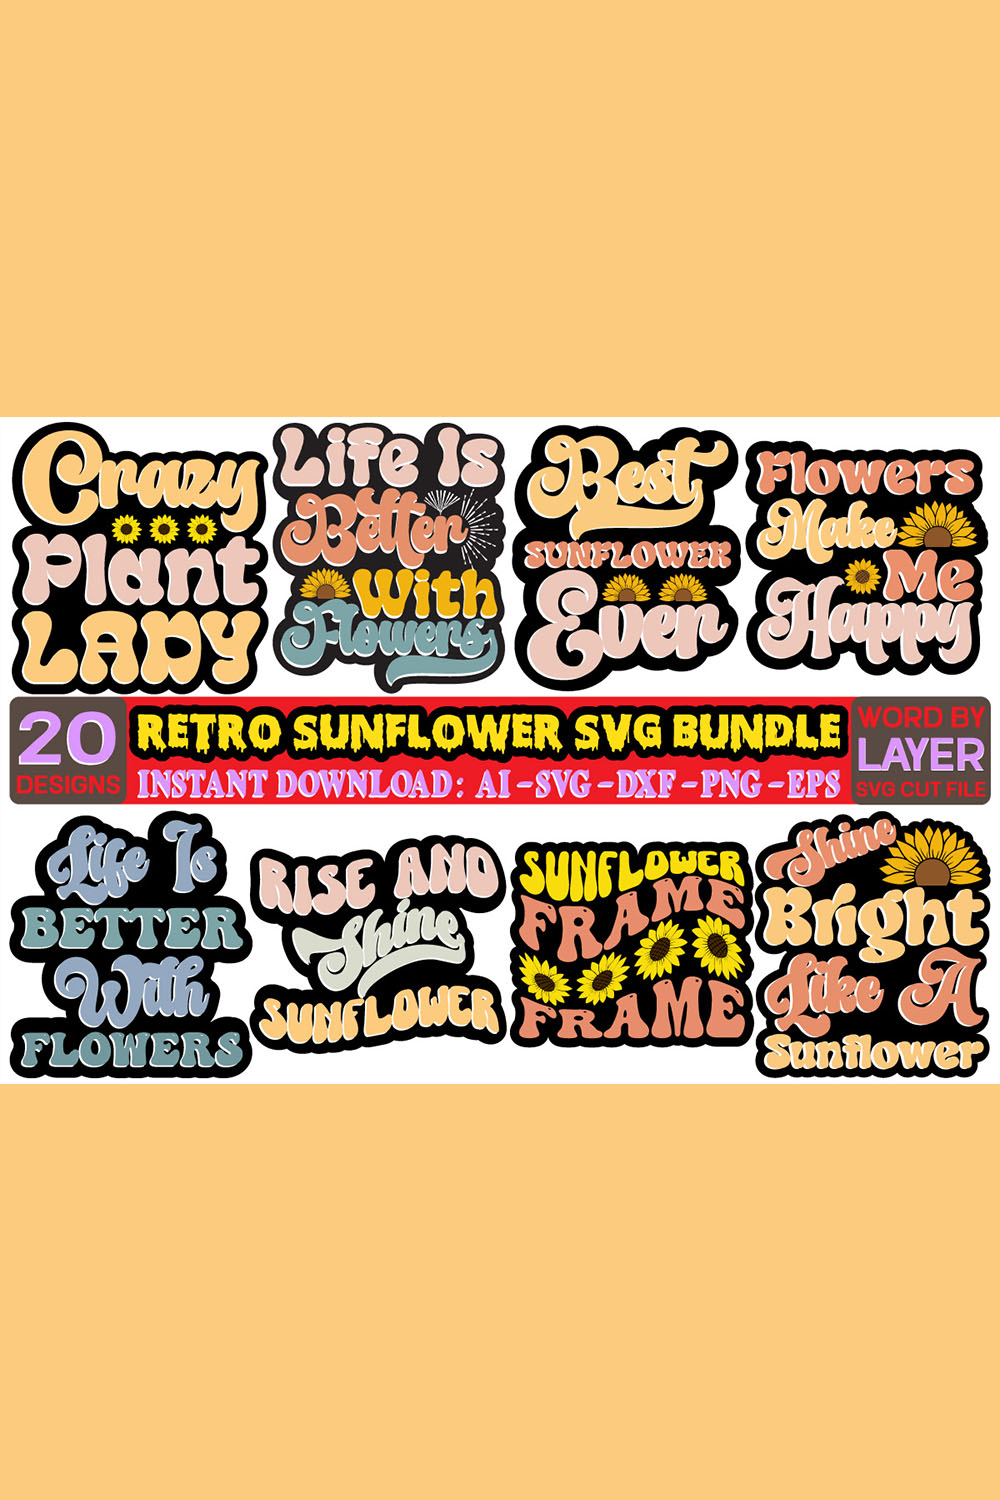 Retro Sunflower SVG Bundle pinterest image.